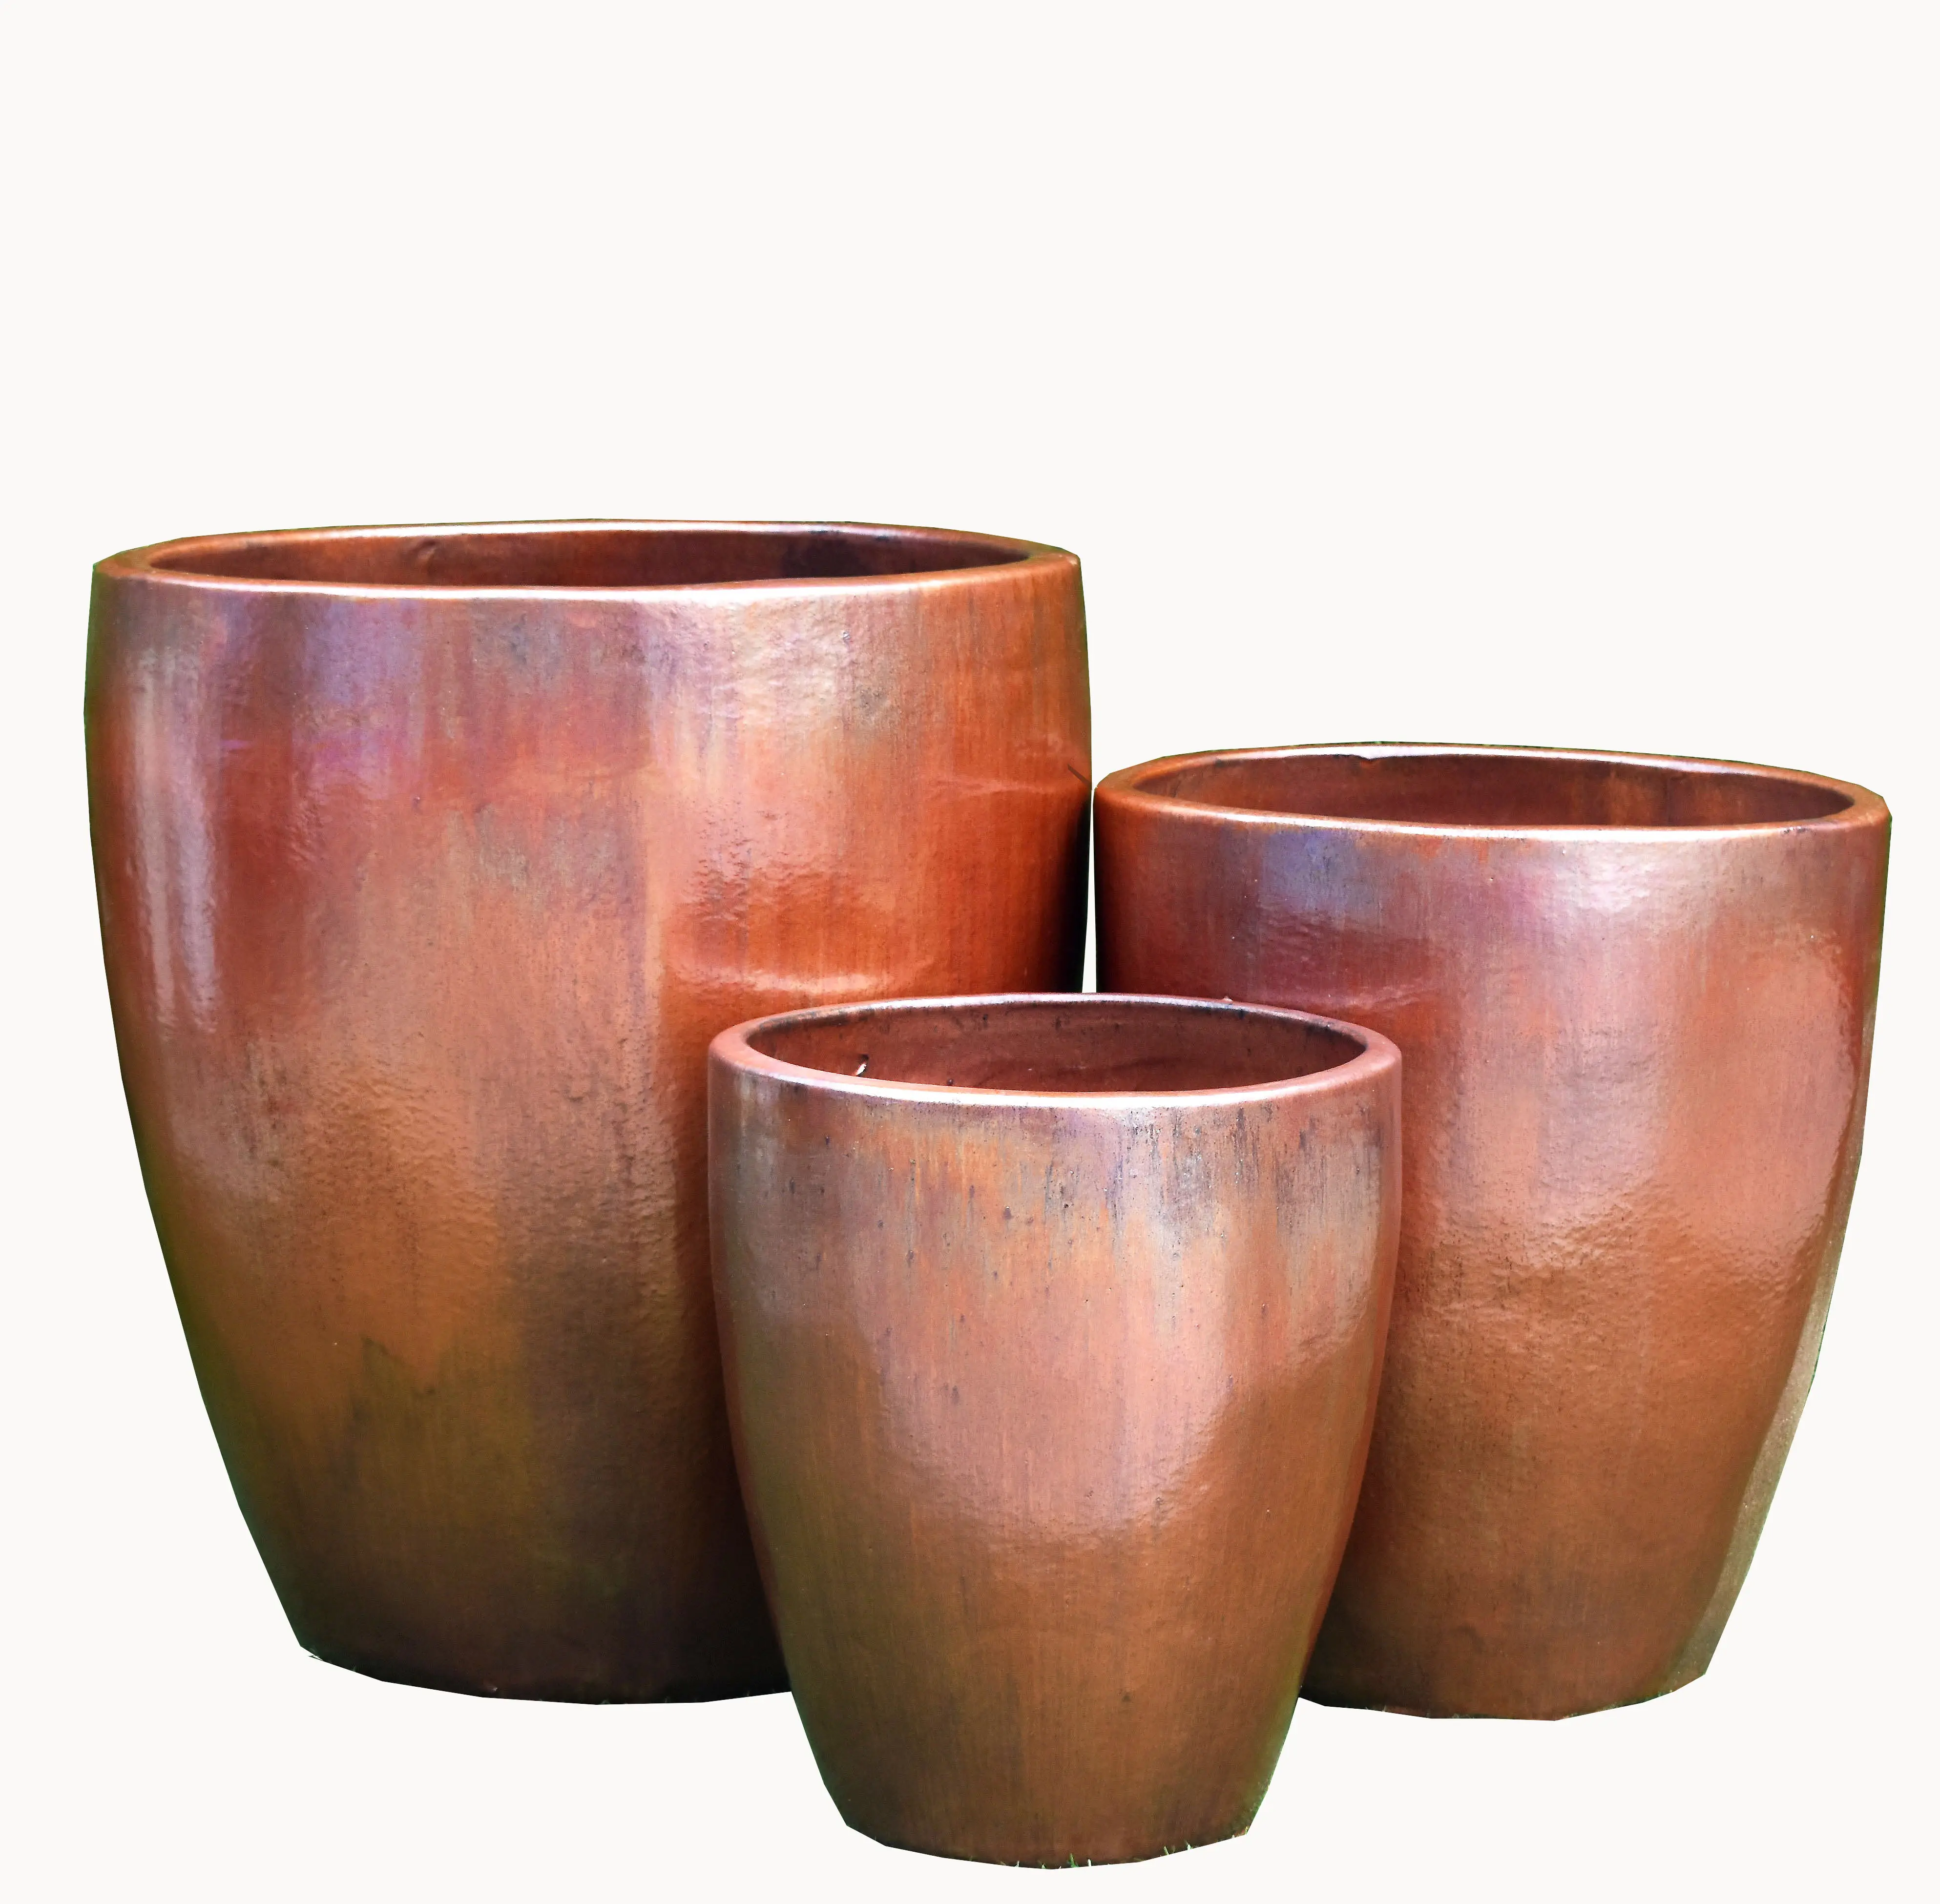 Terracotta Garden Decoration Pottery Flower Pot Big Ceramic Clay Planter Indoor and Outdoor Suitable